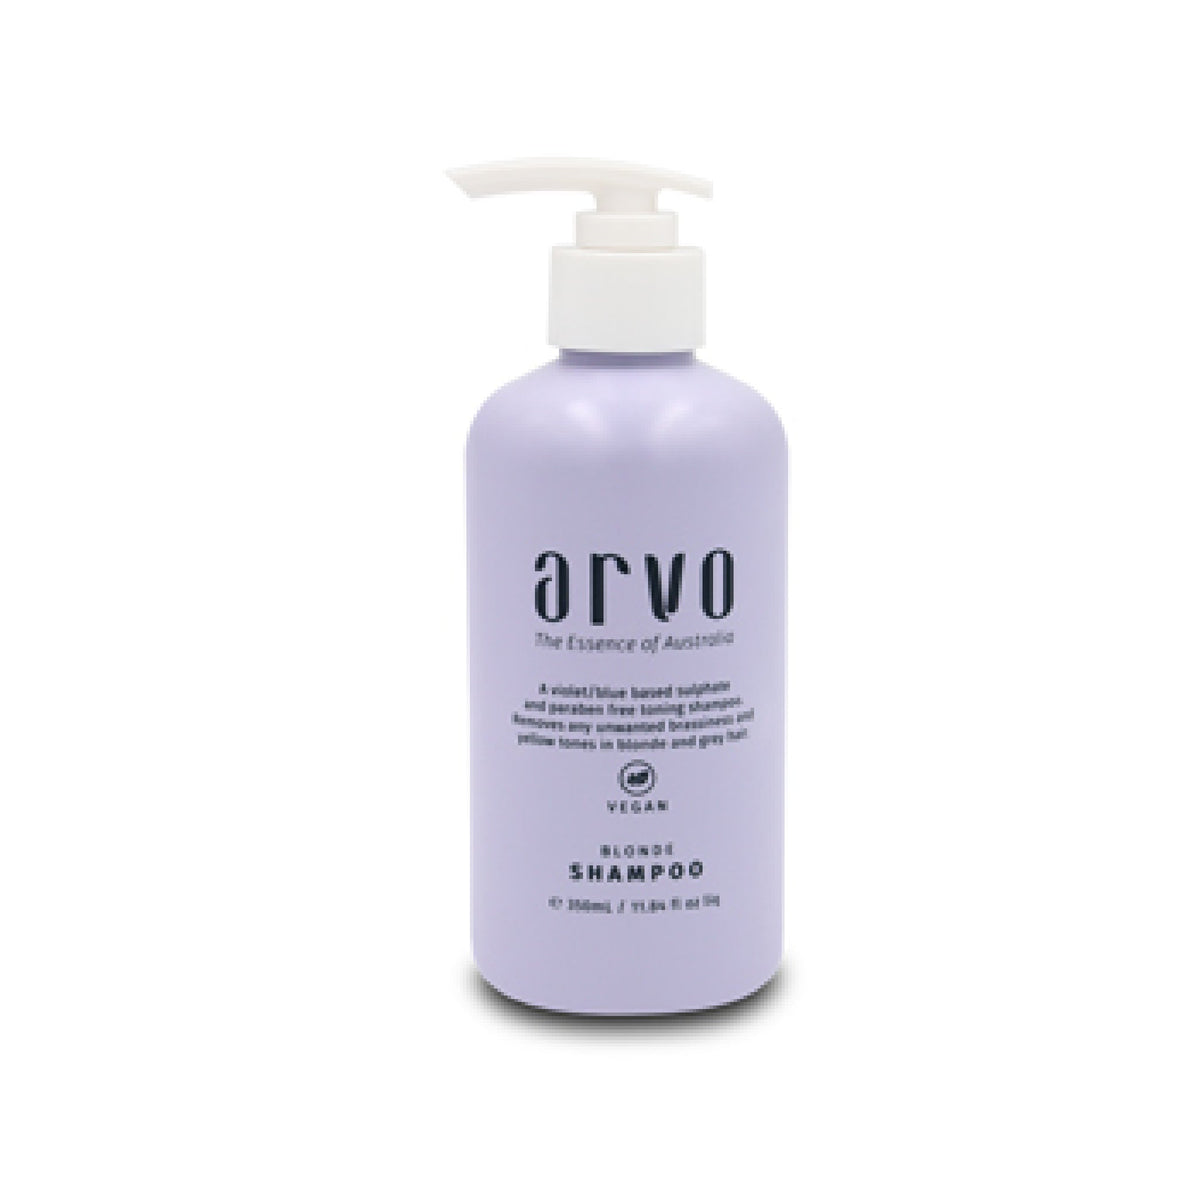 ARVO Blonde Shampoo - Haircare Superstore